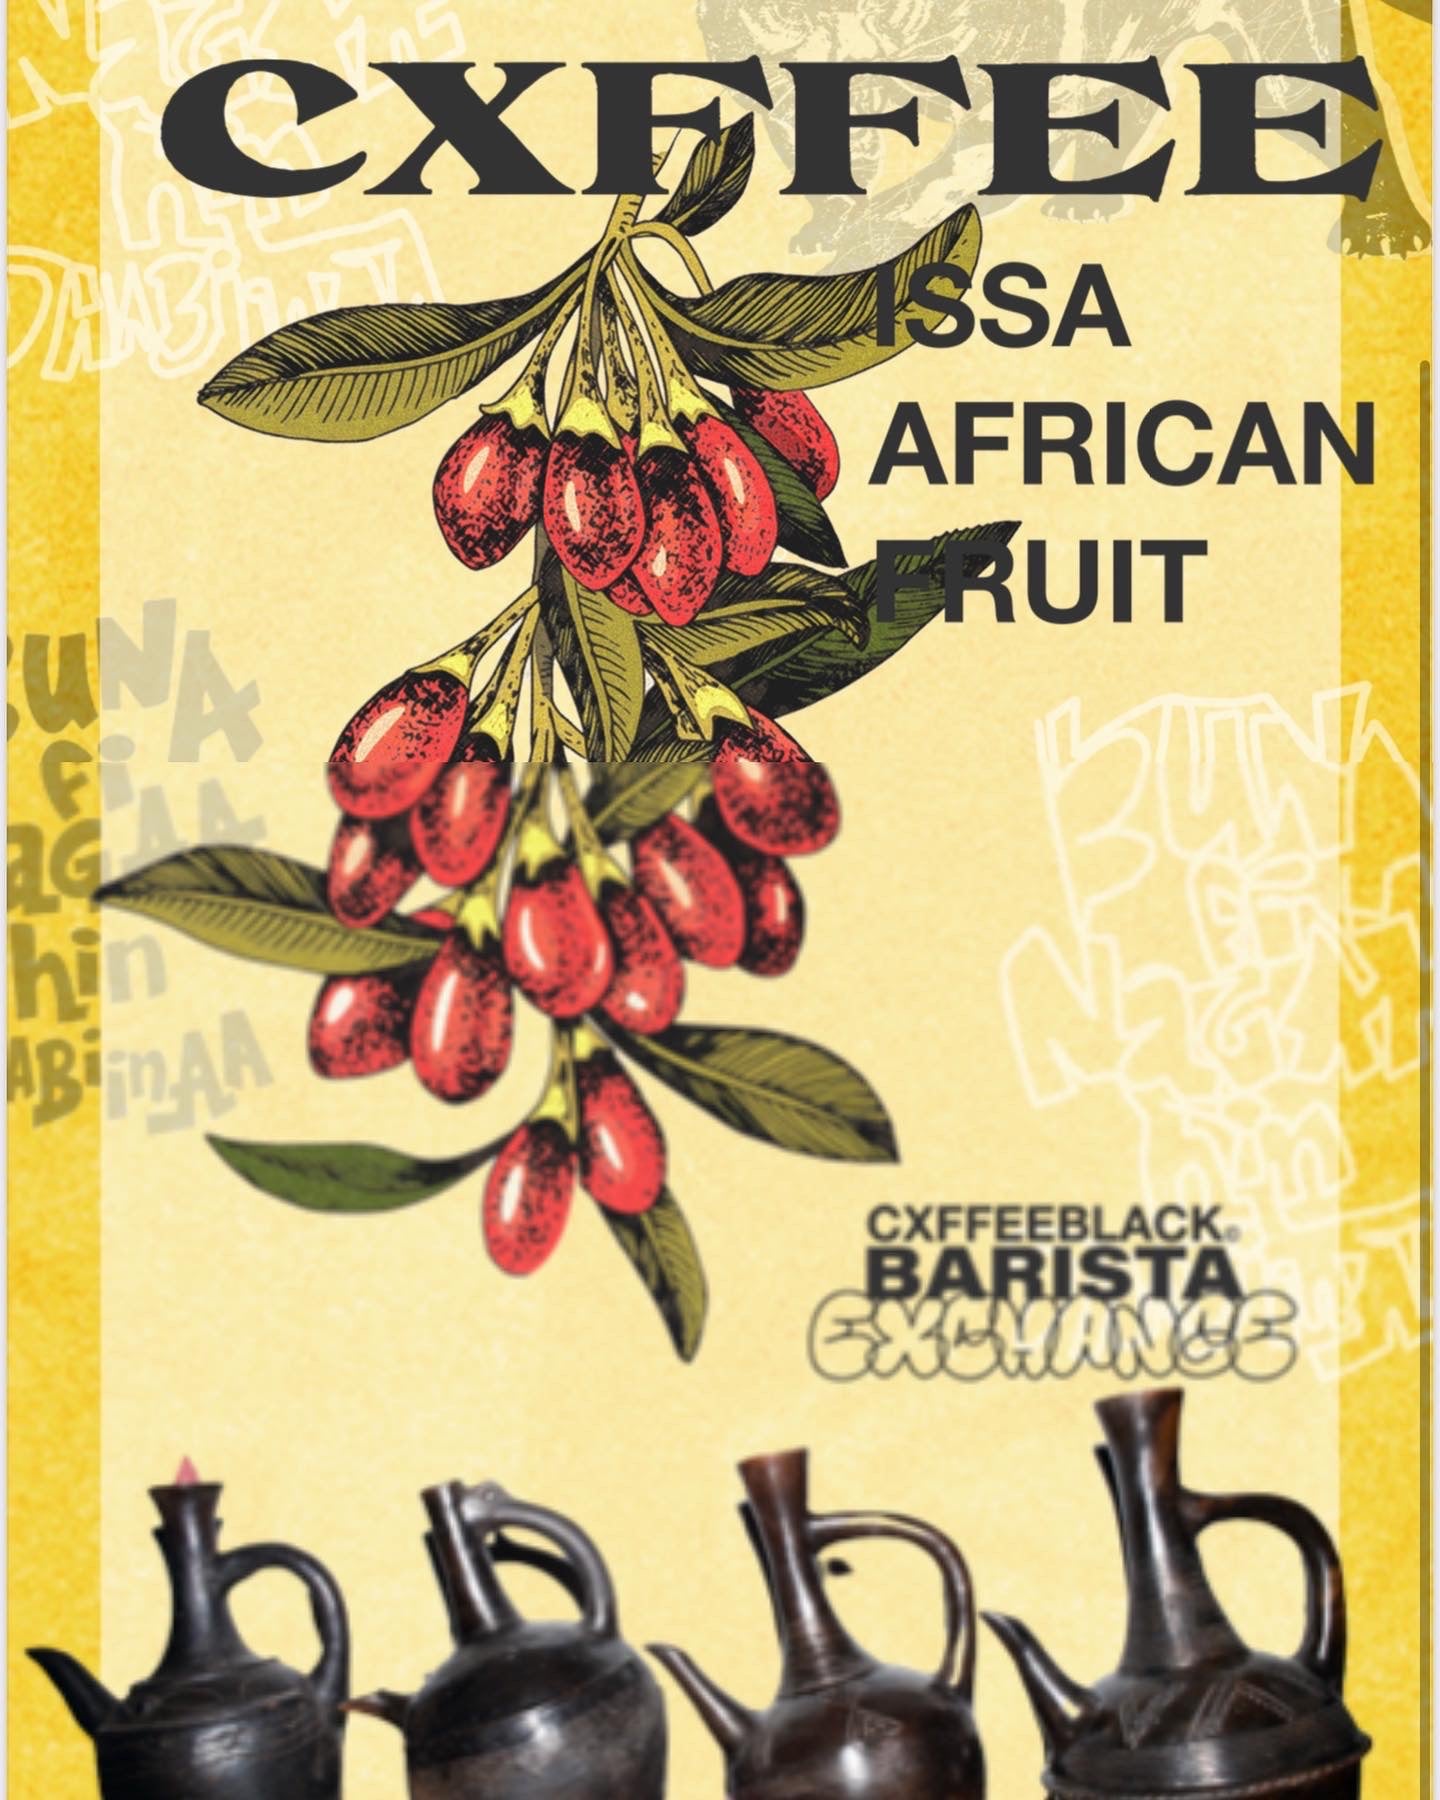 Cxffeeblack to Africa: Black Barista Exchange Ticket